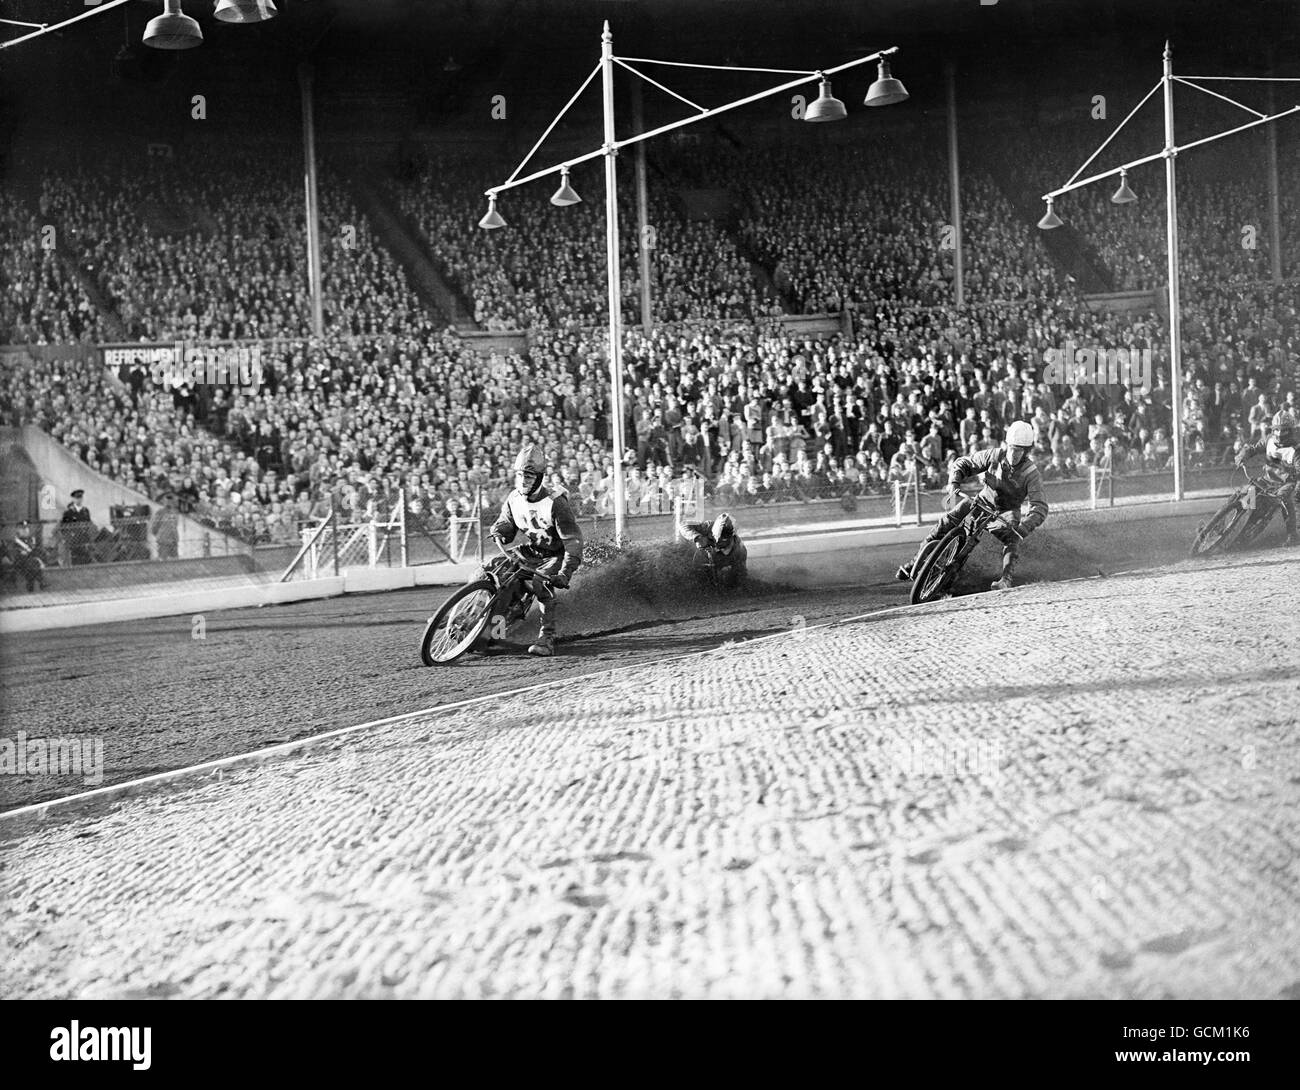 Speedway - Wembley Stadium. Speedway racing in progress at Wembley Stadium. Stock Photo